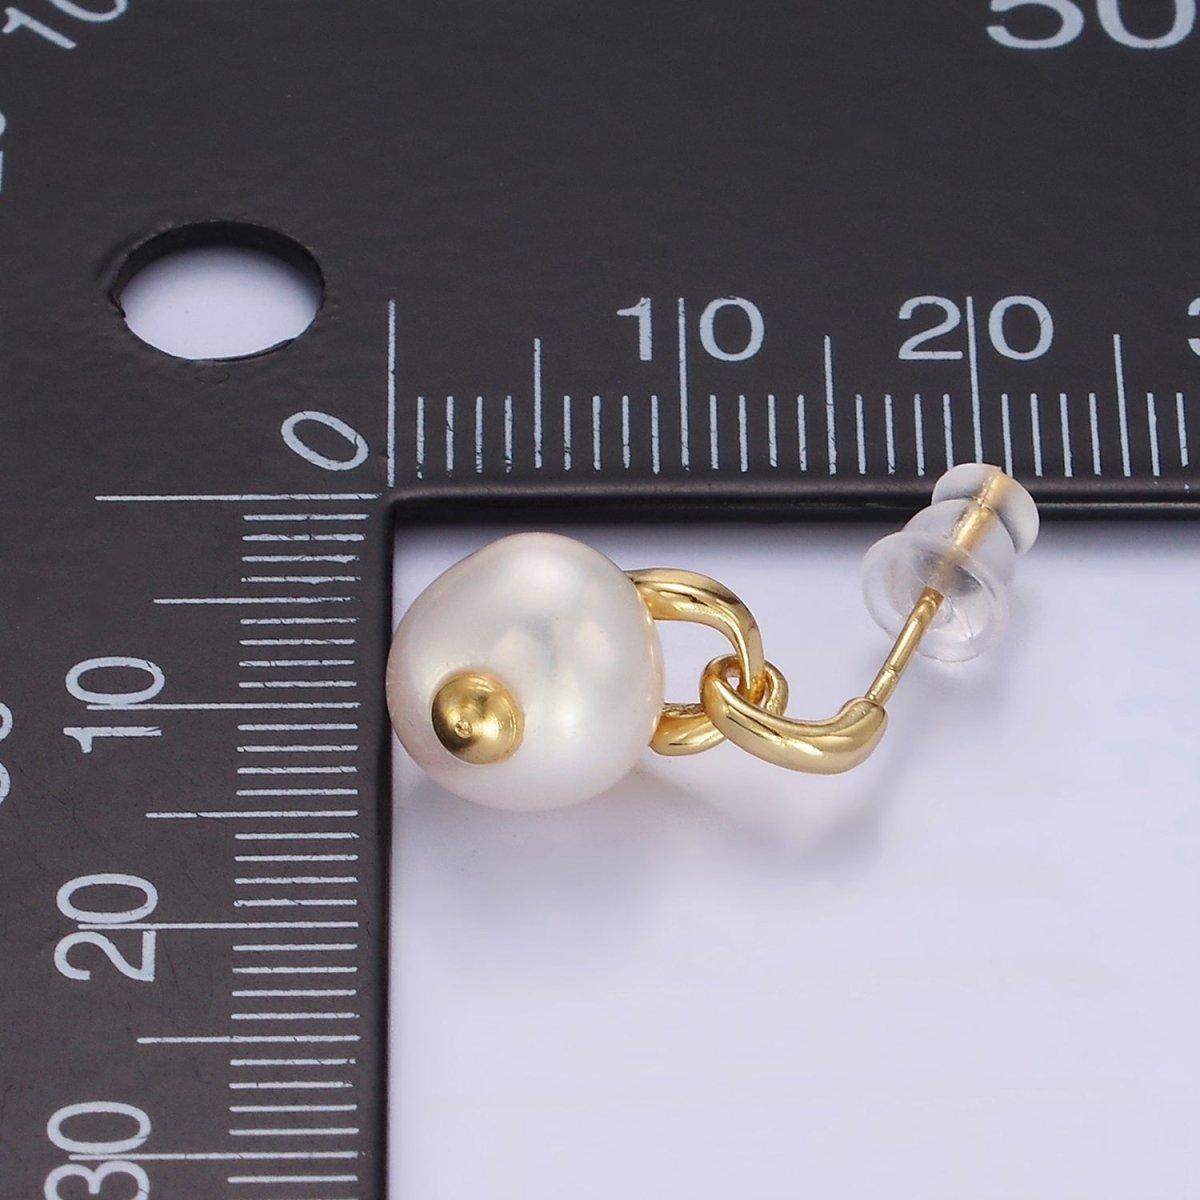 14K Gold Filled Pearl Button Padlock Stud Drop Earrings | V521 - DLUXCA